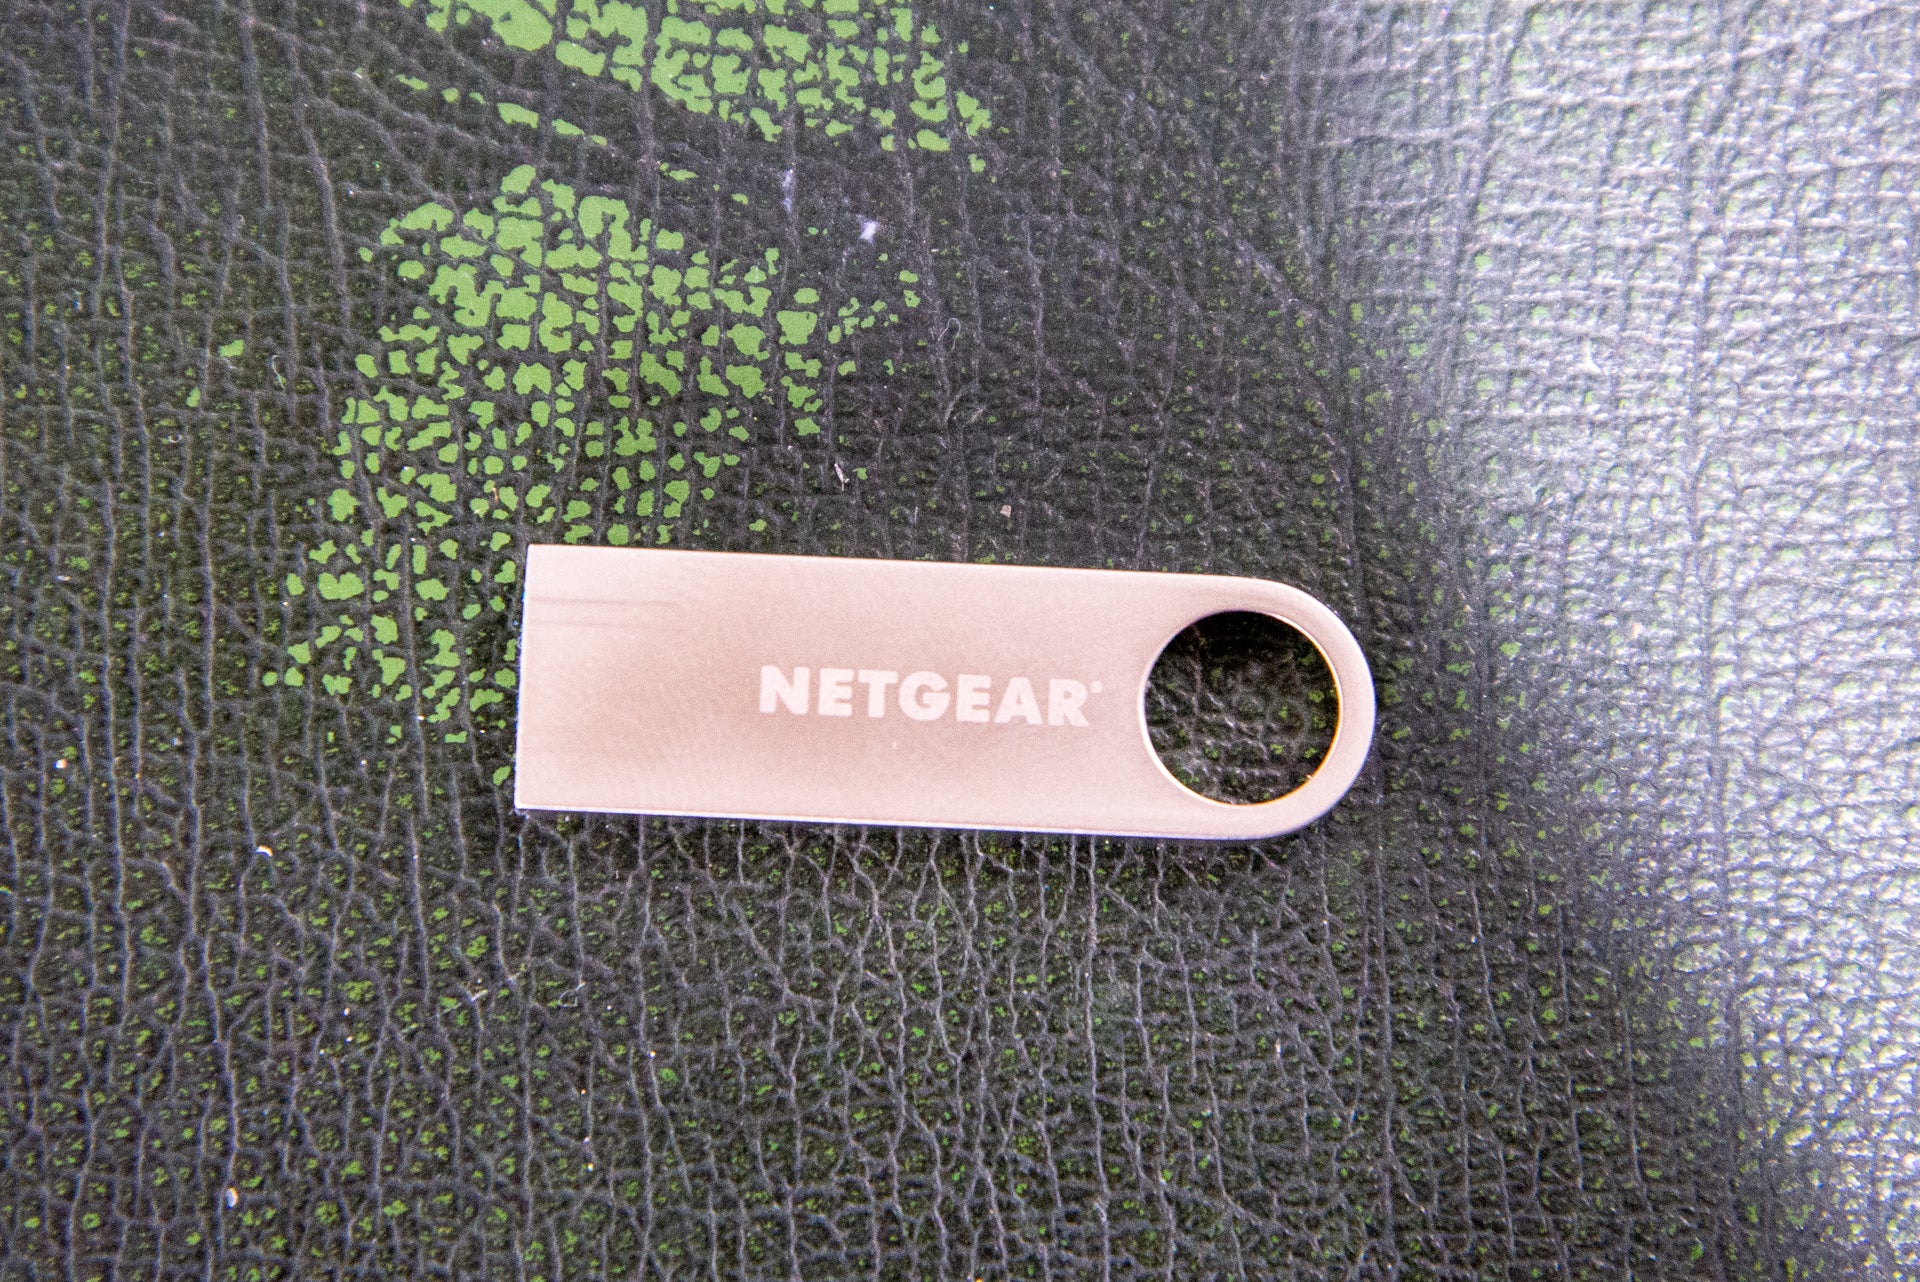 Netgear Nighthawk Tri-Band USB 3.0 WiFi Adapter A8000 driver on flash drive